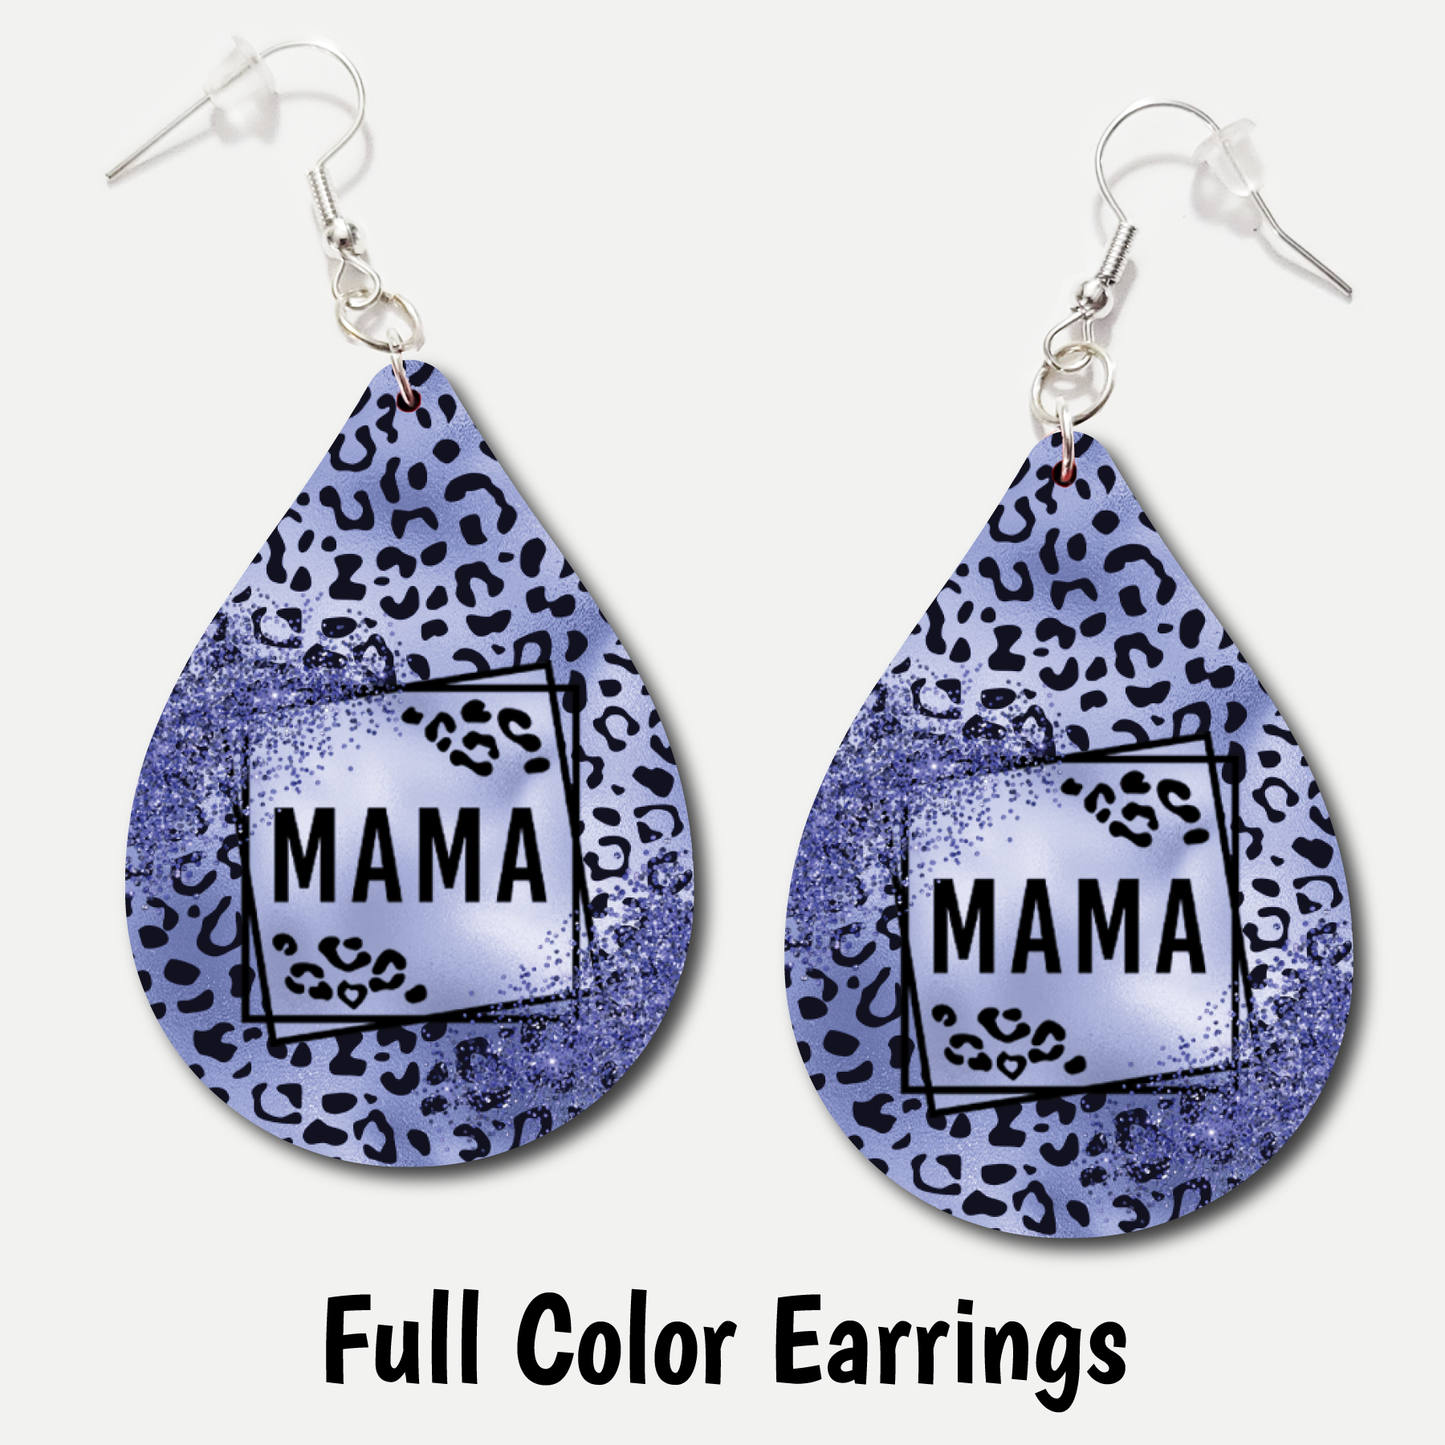 Mama Leopard - Full Color Earrings